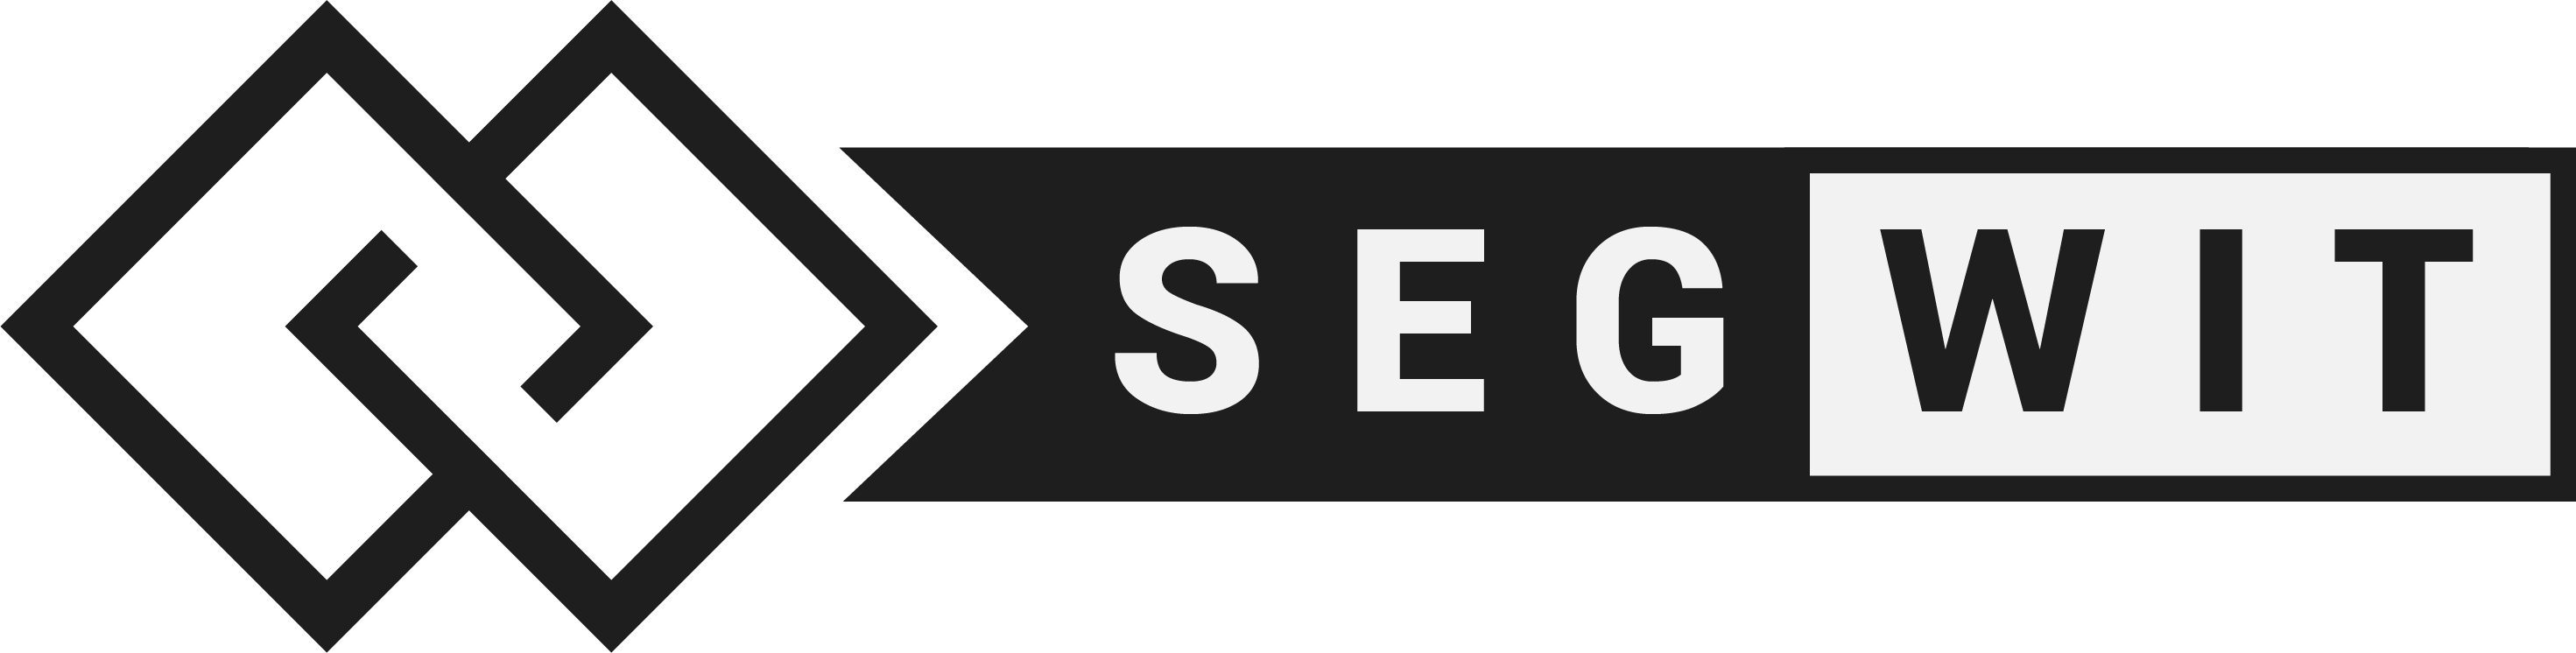 Segregated Witness logo